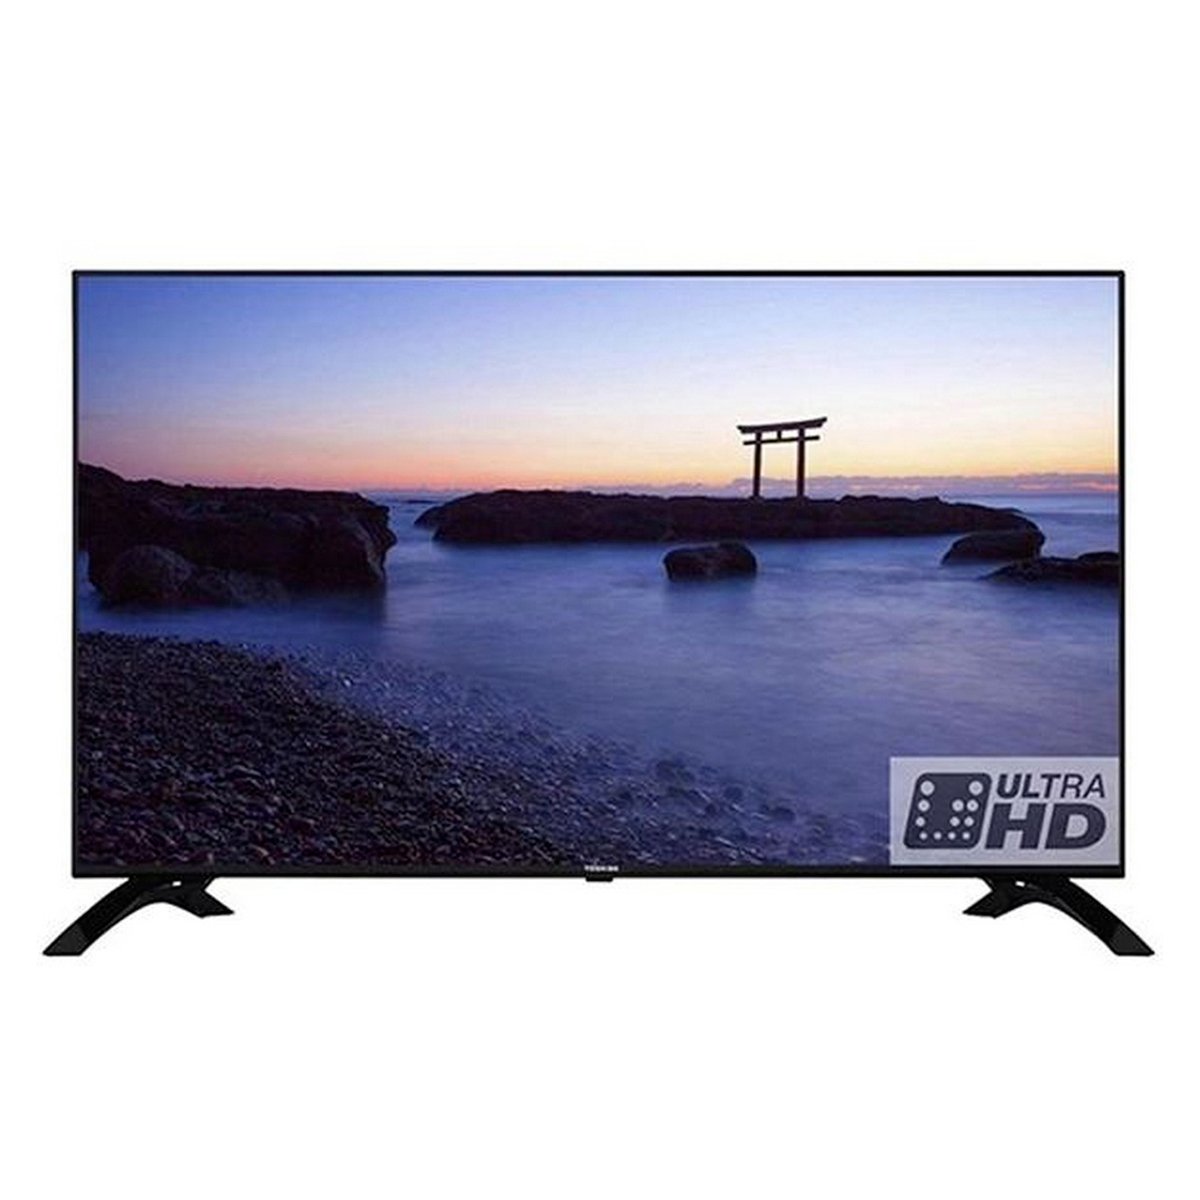 Toshiba Ultra HD Smart LED TV 55U5850EE 55inch